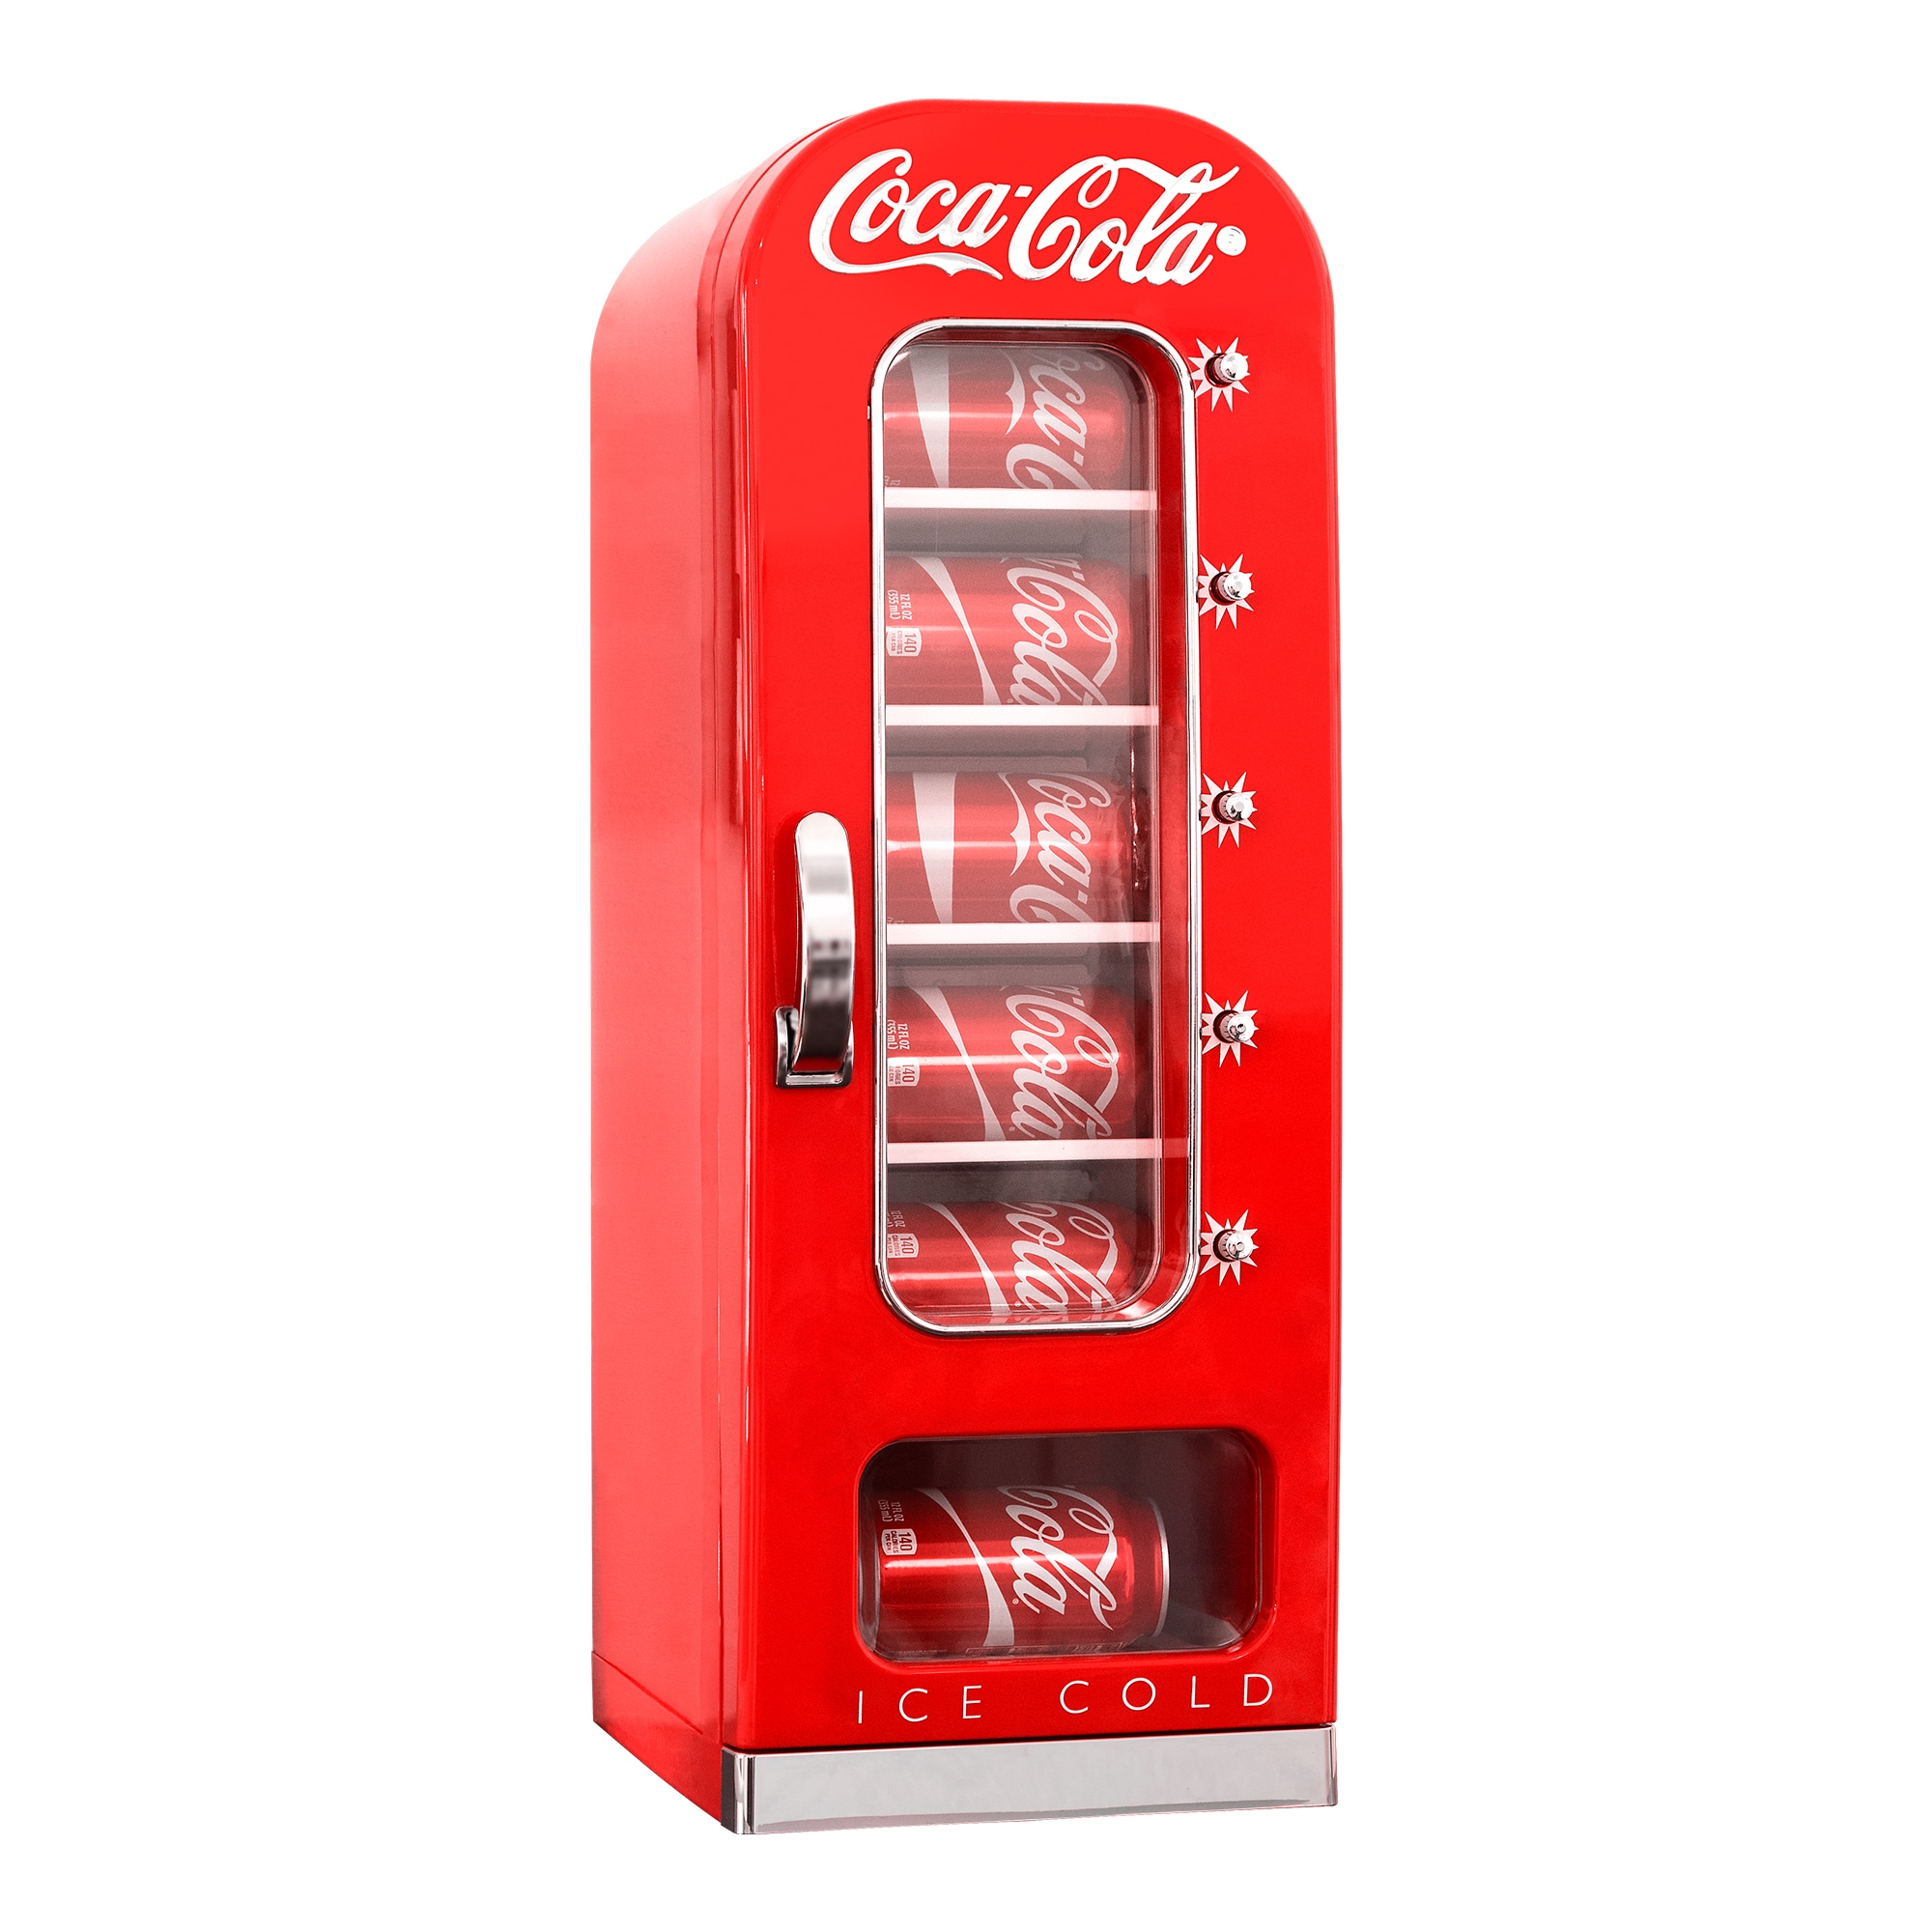 Mini-Frigo Coca Cola